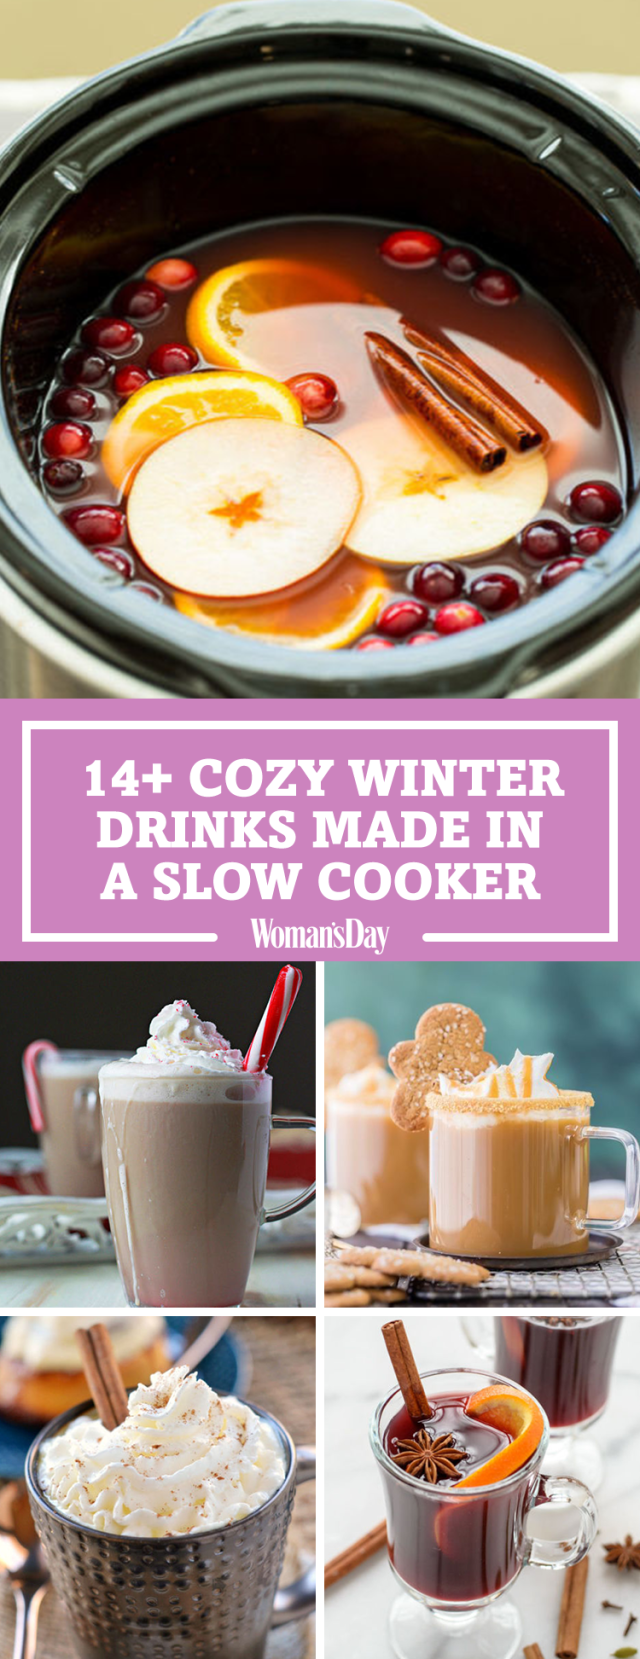 Slow Cooker Cocktails - Slow Cooker Drink Recipes